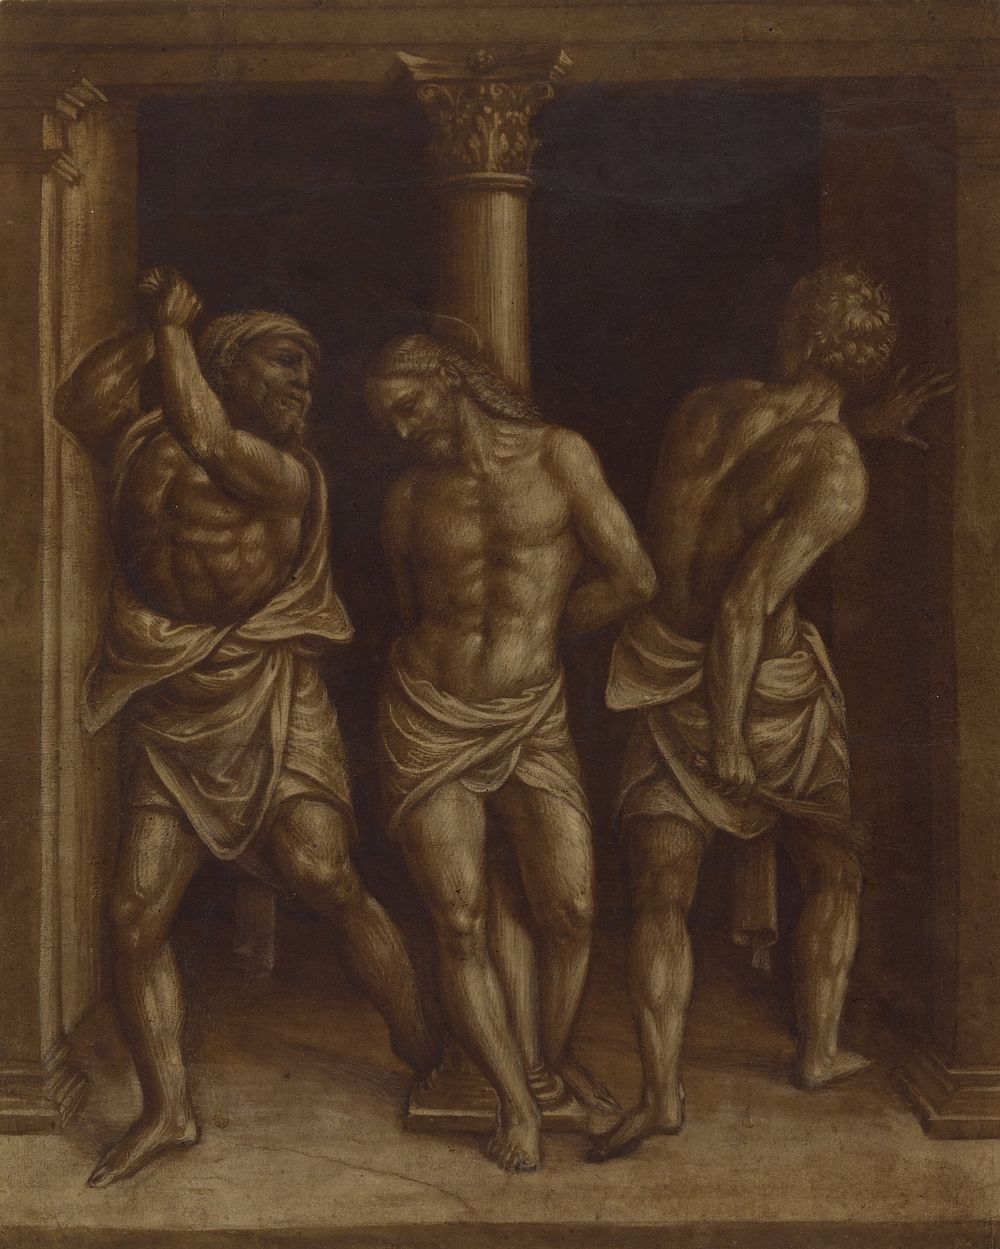 The Flagellation by Bernardino Lanino